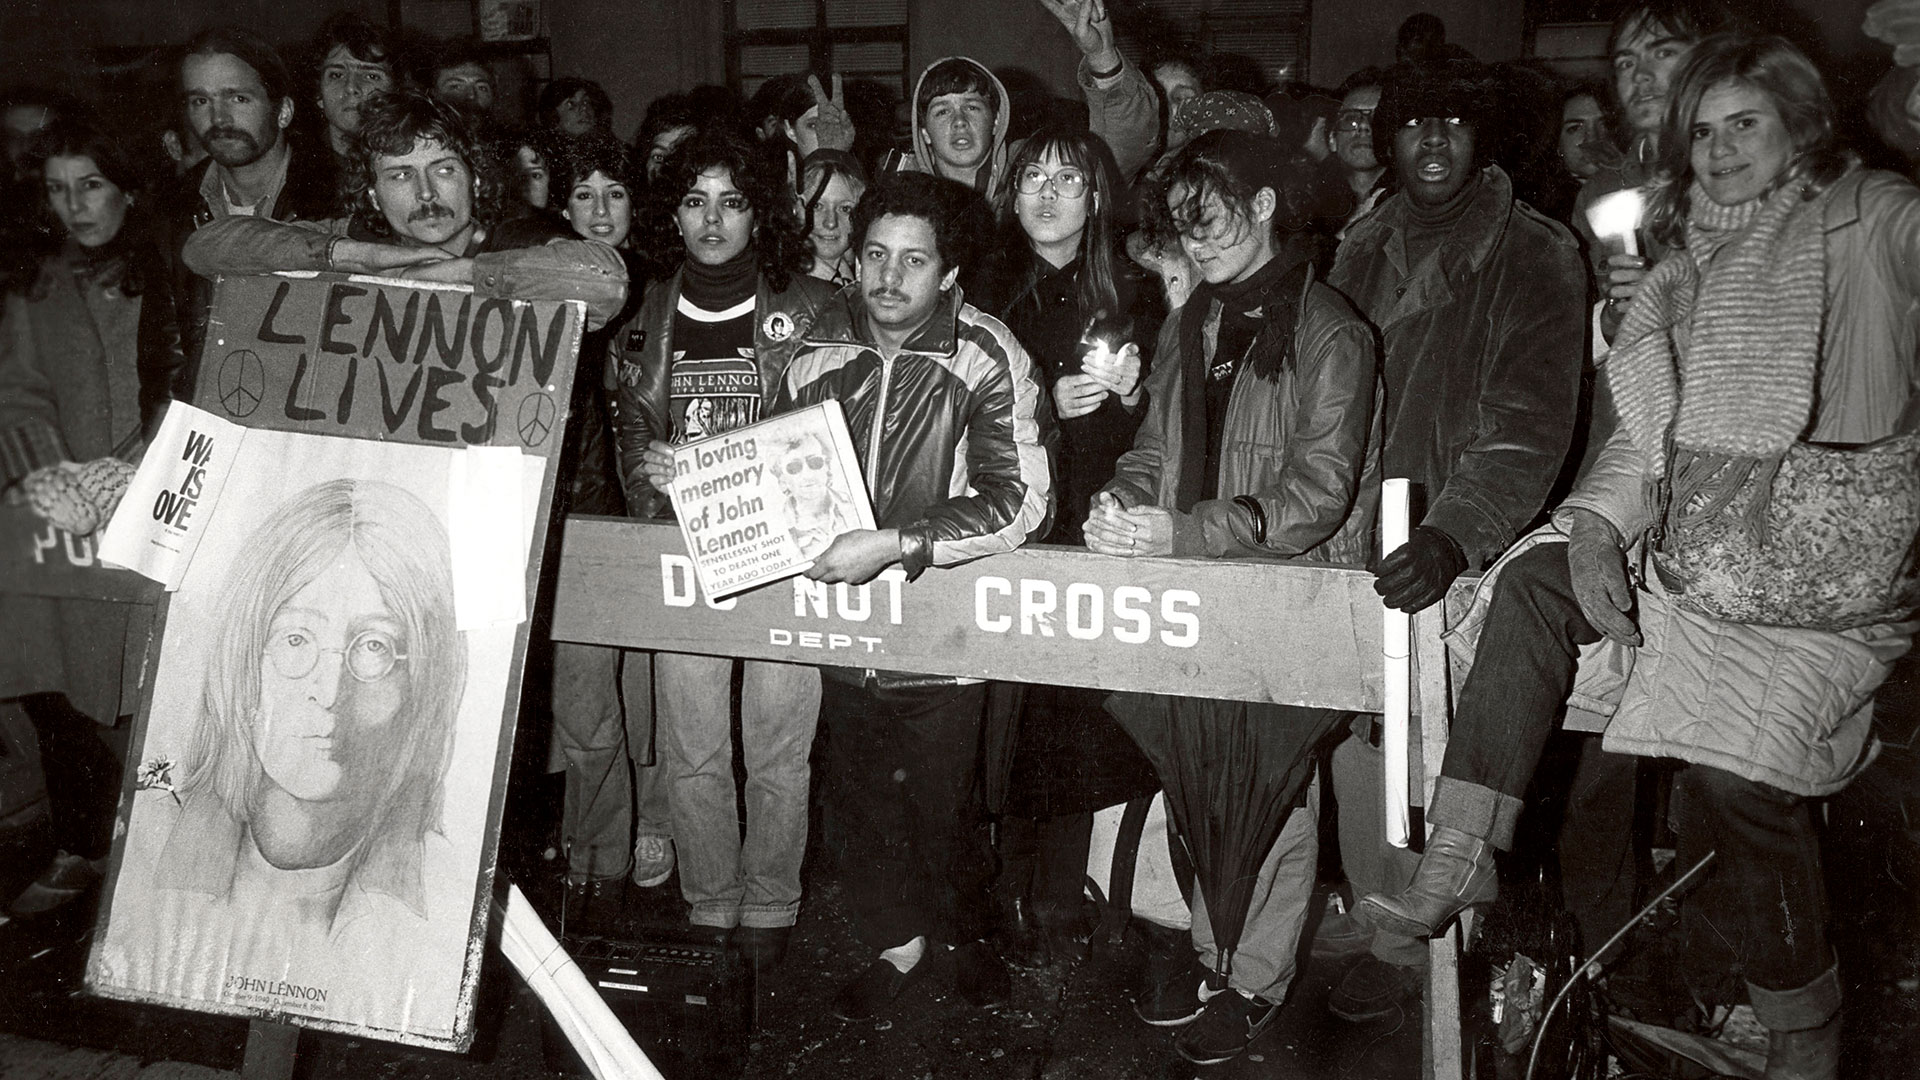 John Lennon fans outside the Dakota building in New York, on the day of his assassination, December 8, 1980 (Photo: Grosby Group)